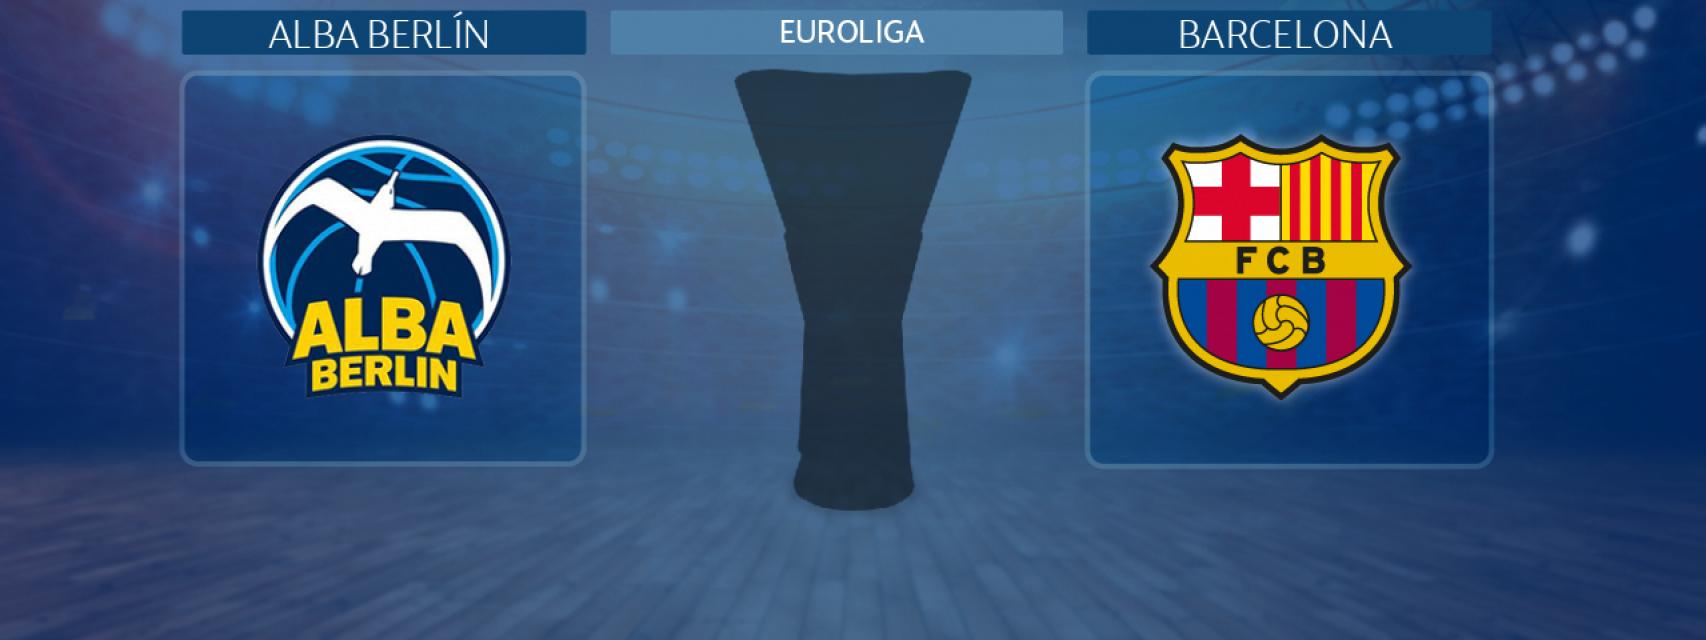 Alba Berlín - Barcelona, partido de la Euroliga